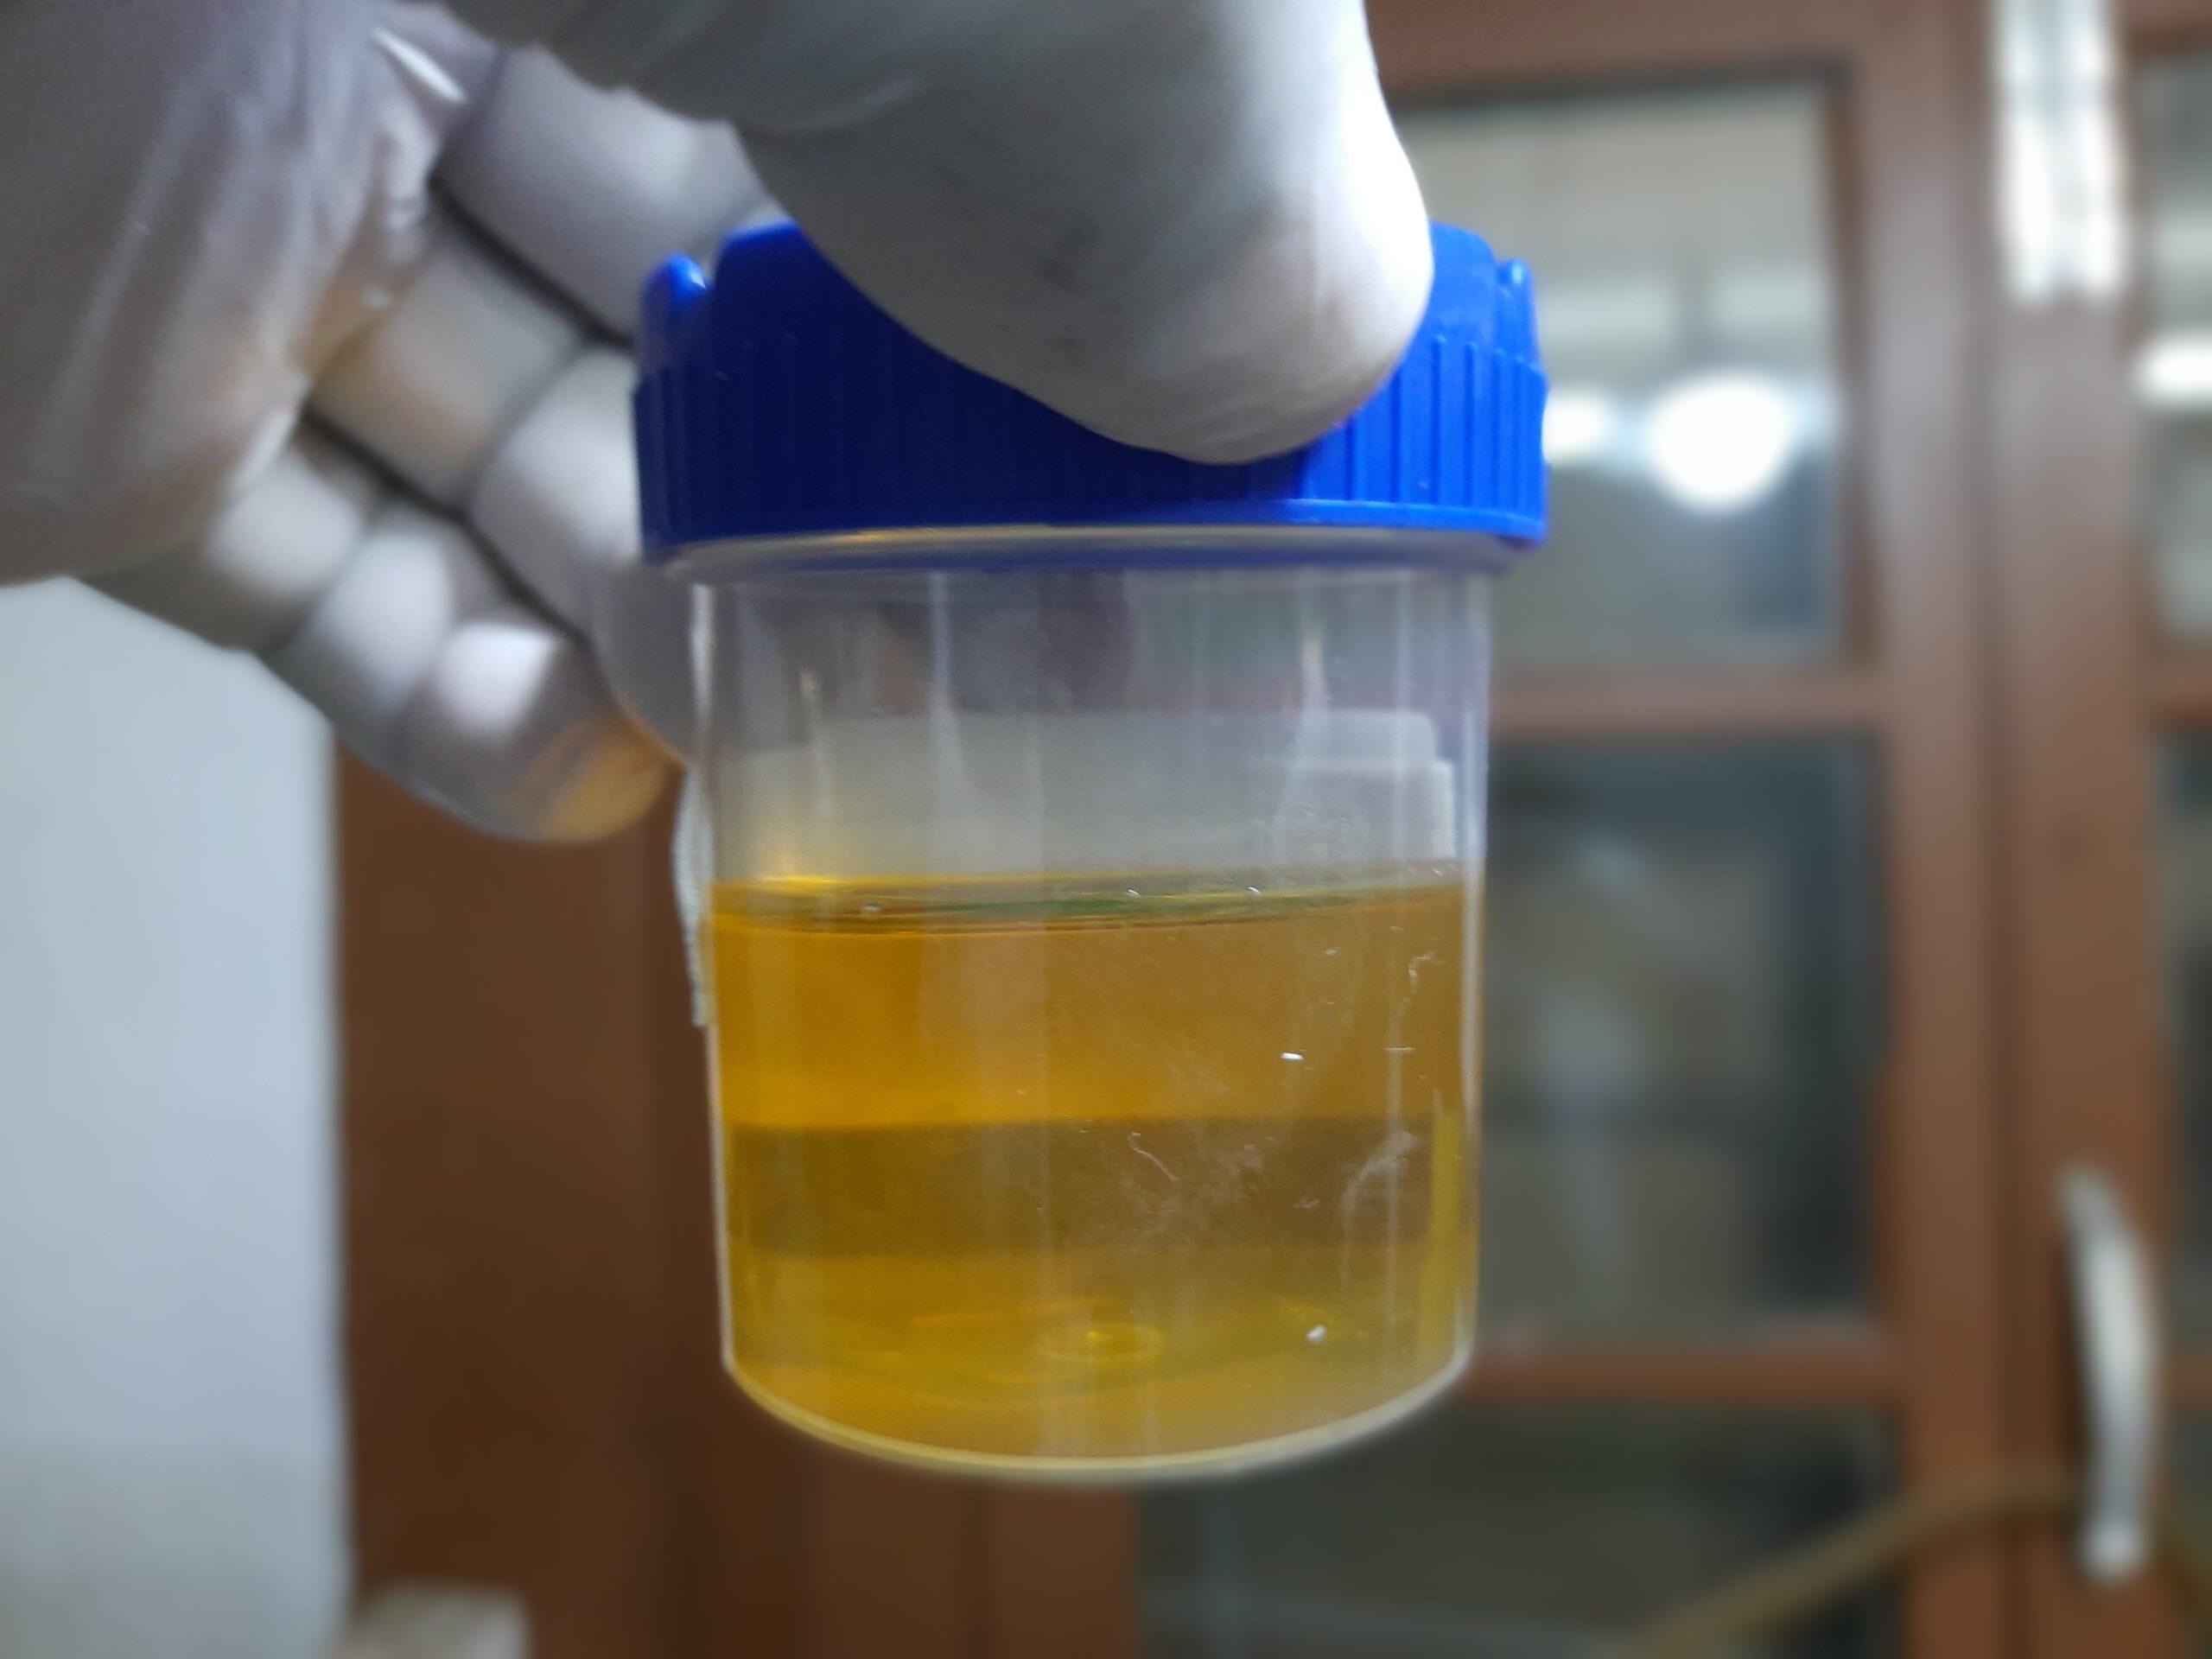 Brain tumour can be detected through urine